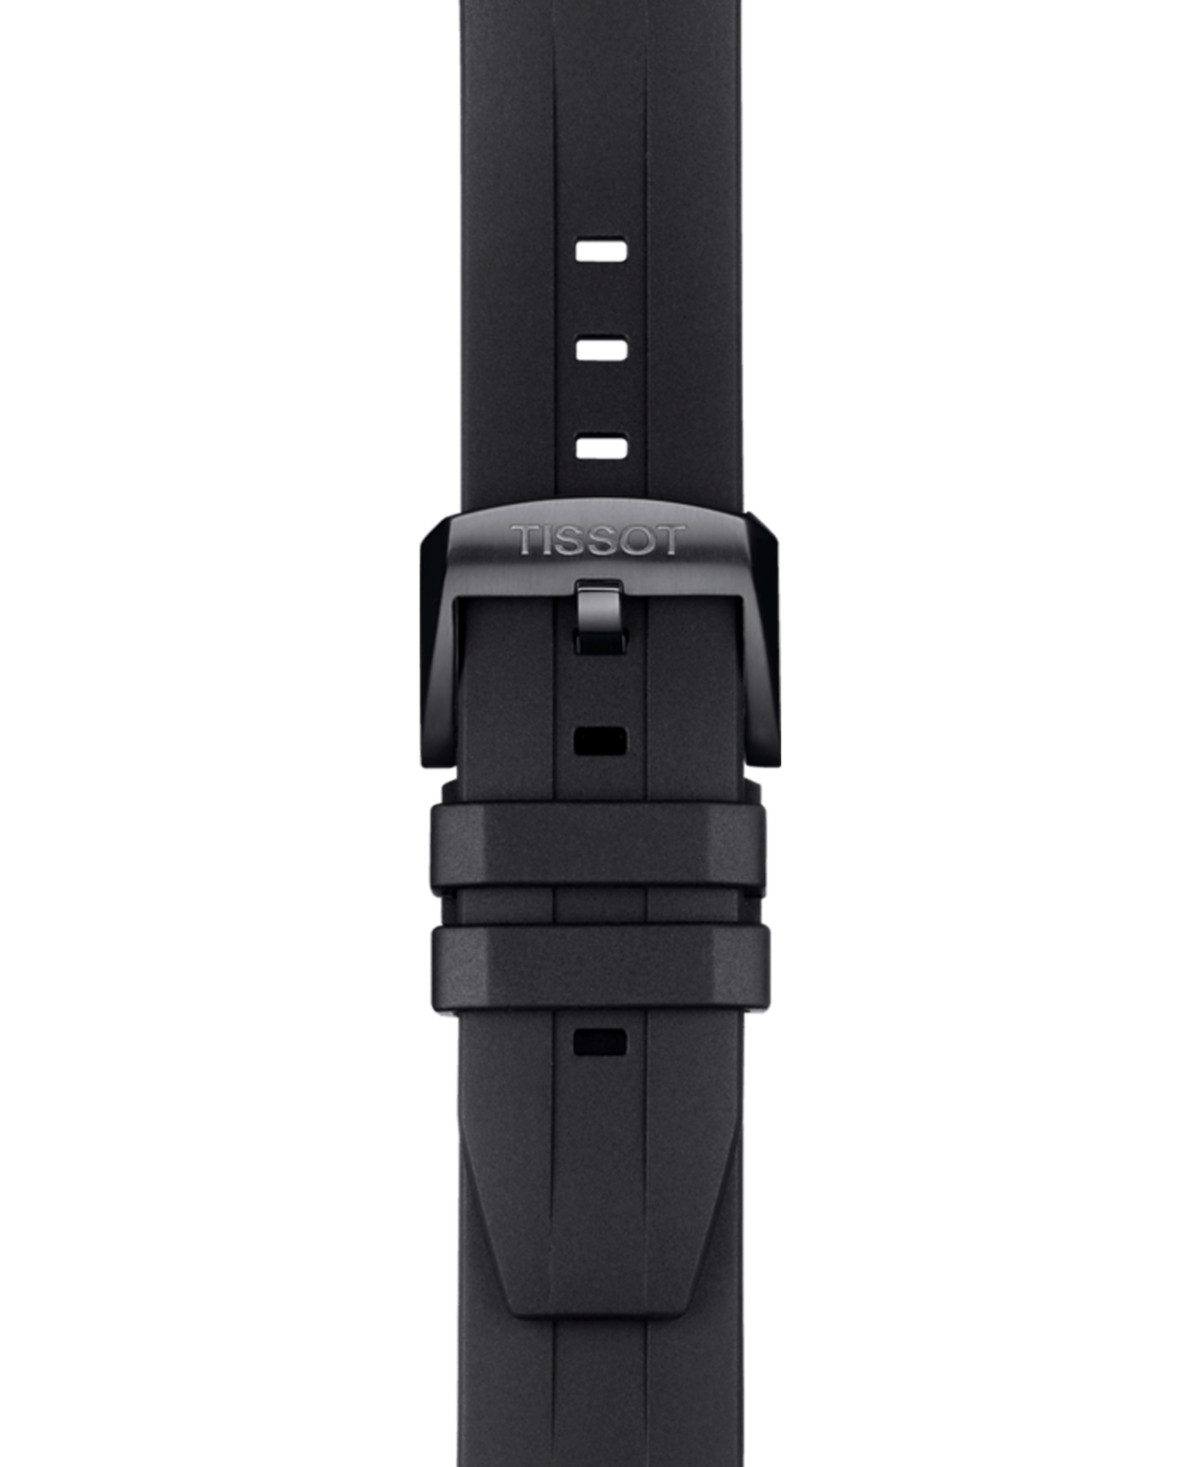 Shop Tissot Men's Swiss Chronograph Seastar Black Rubber Strap Diver Watch 45.5mm